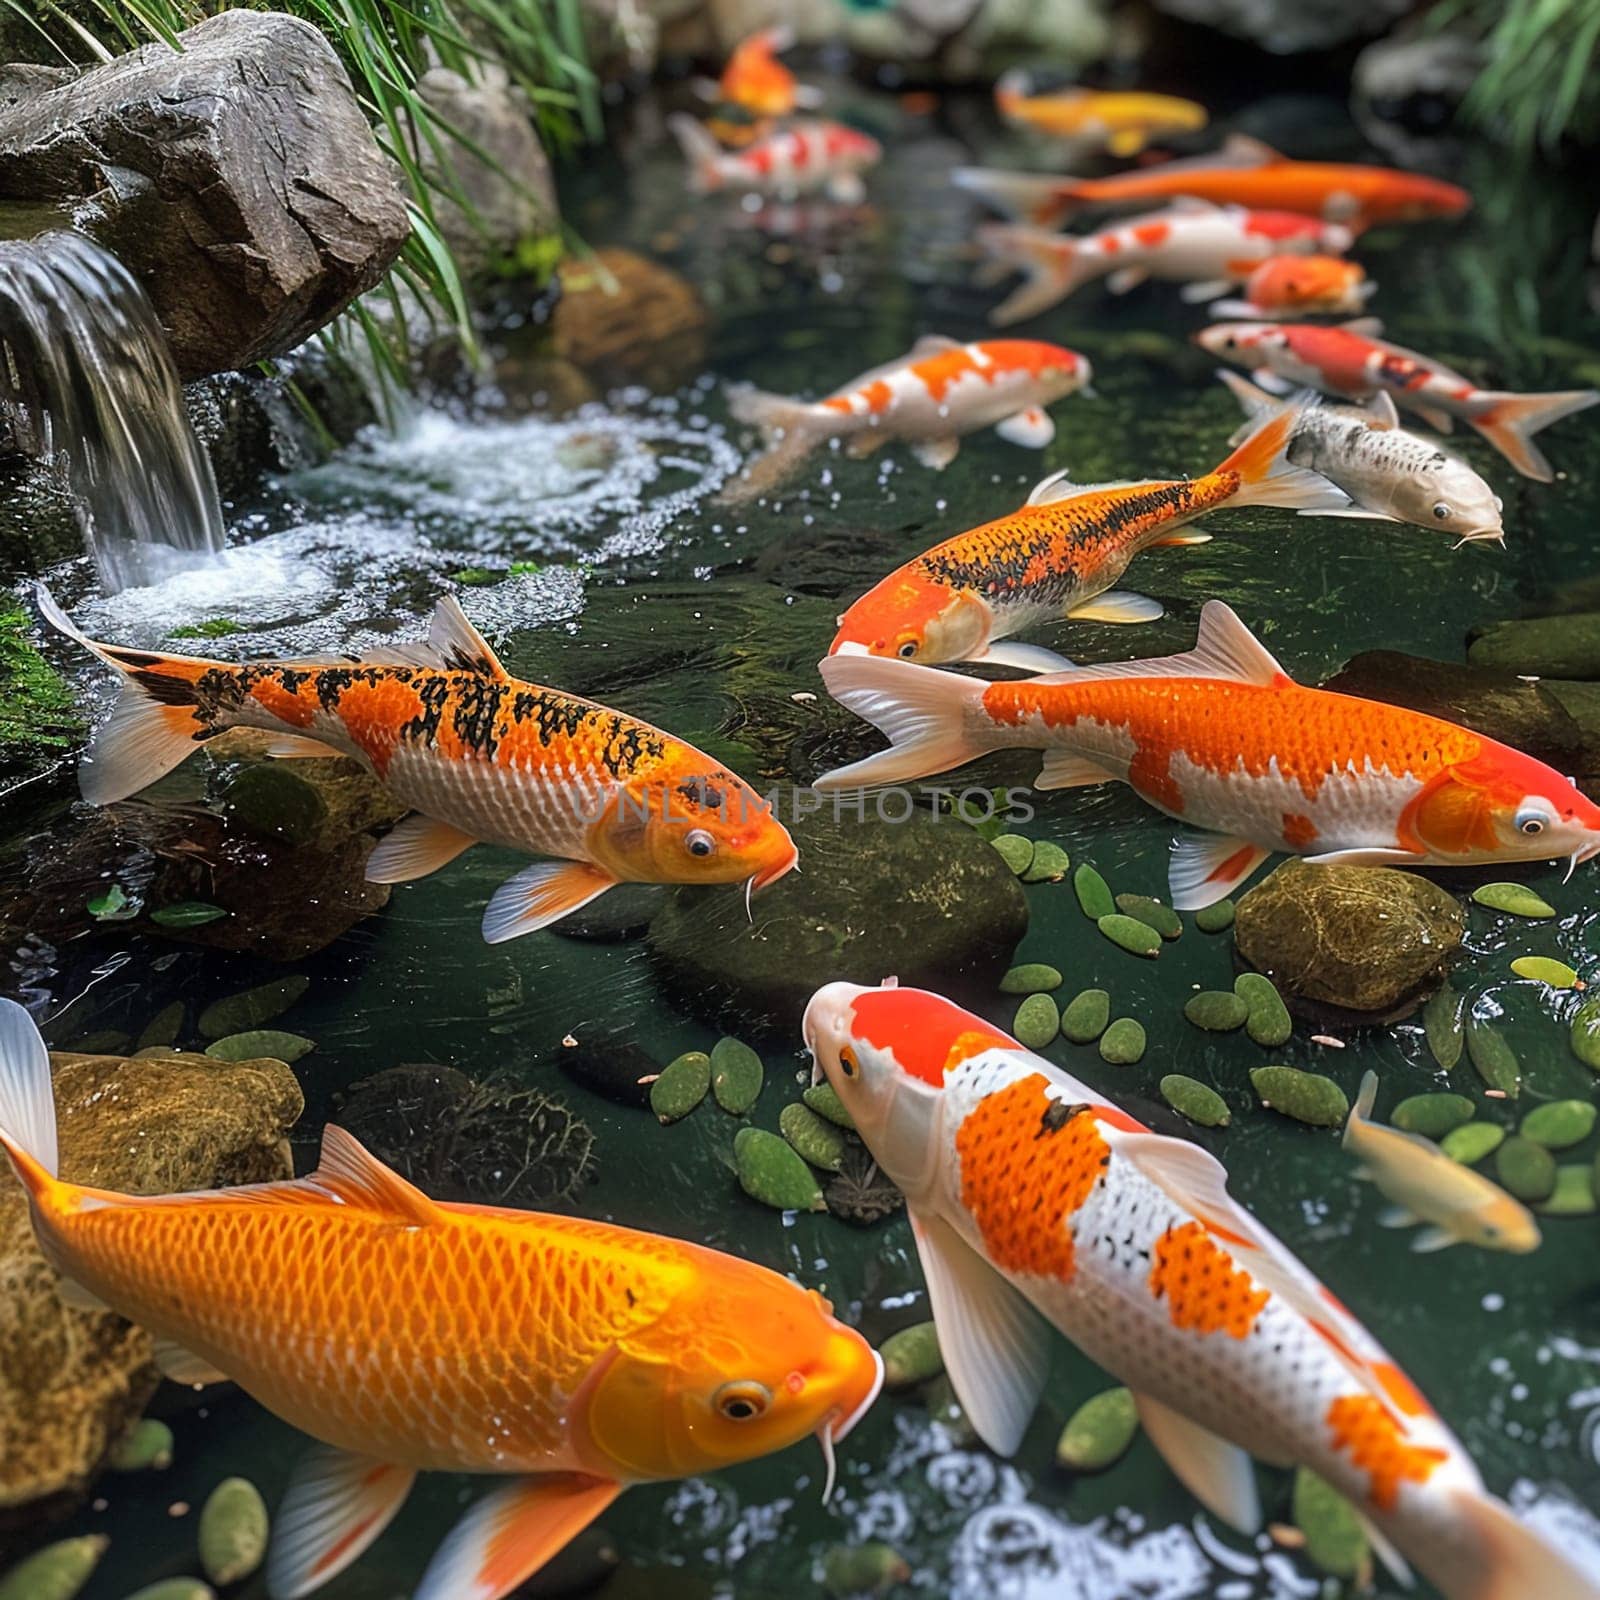 Serene koi pond with vibrant fish, symbolizing tranquility and prosperity.